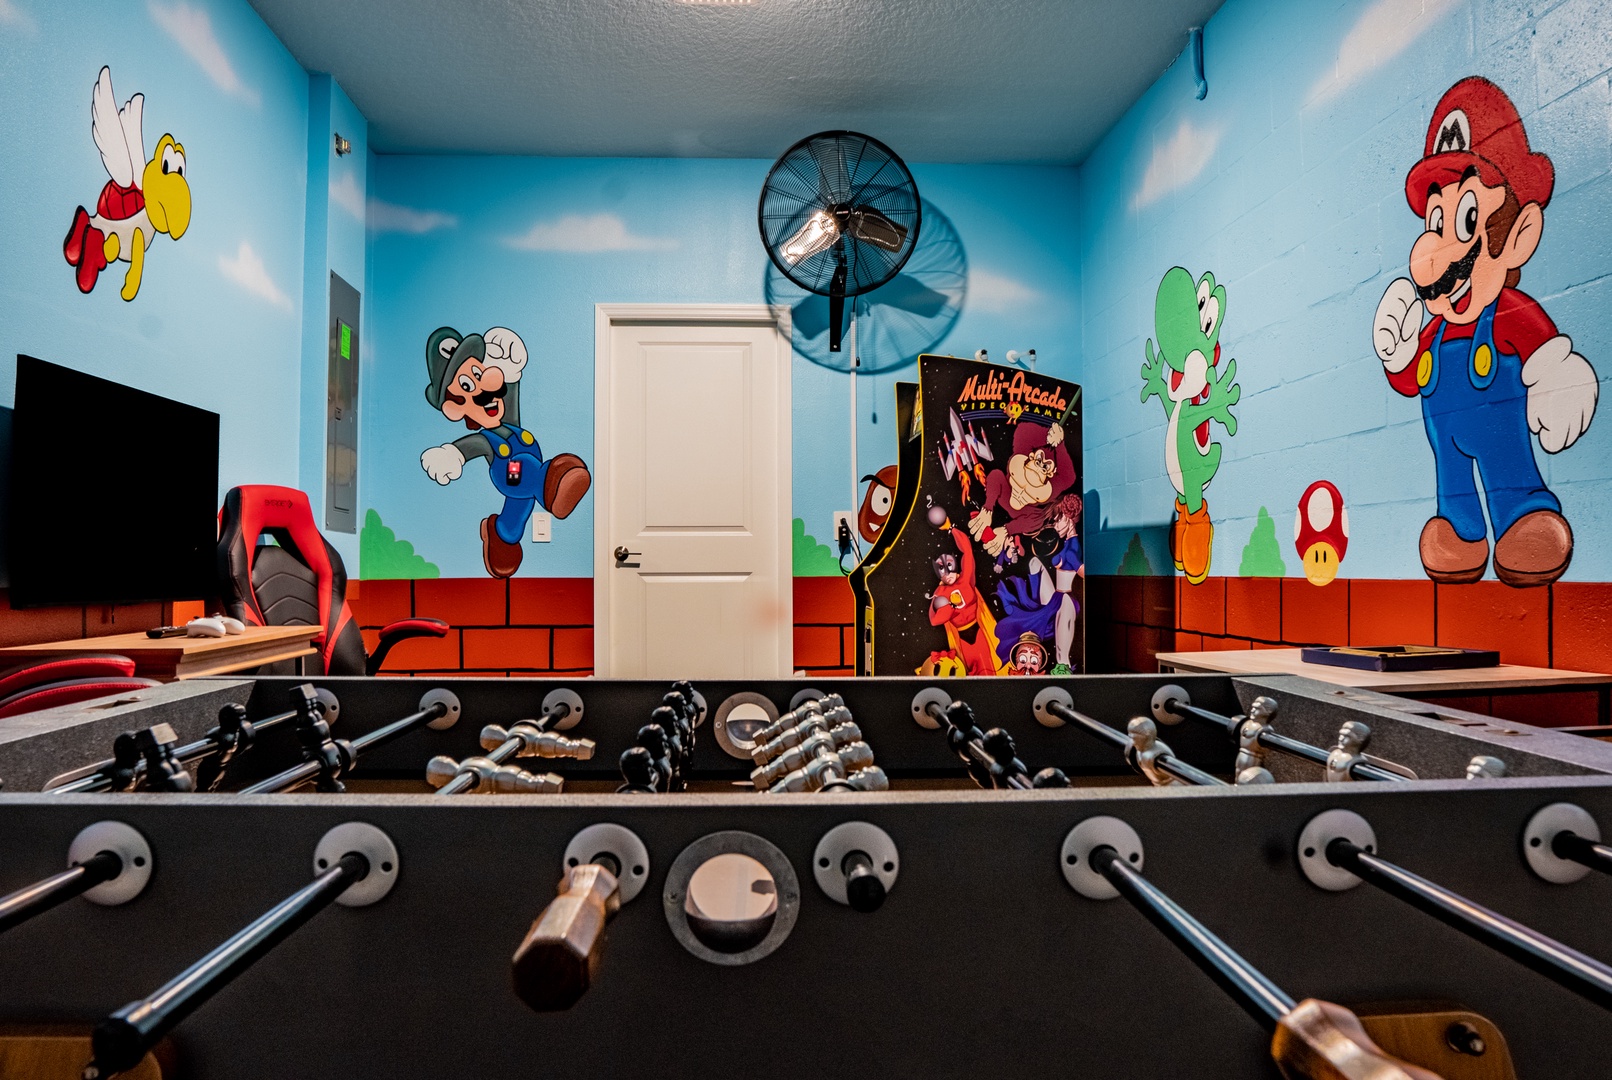 converted gameroom